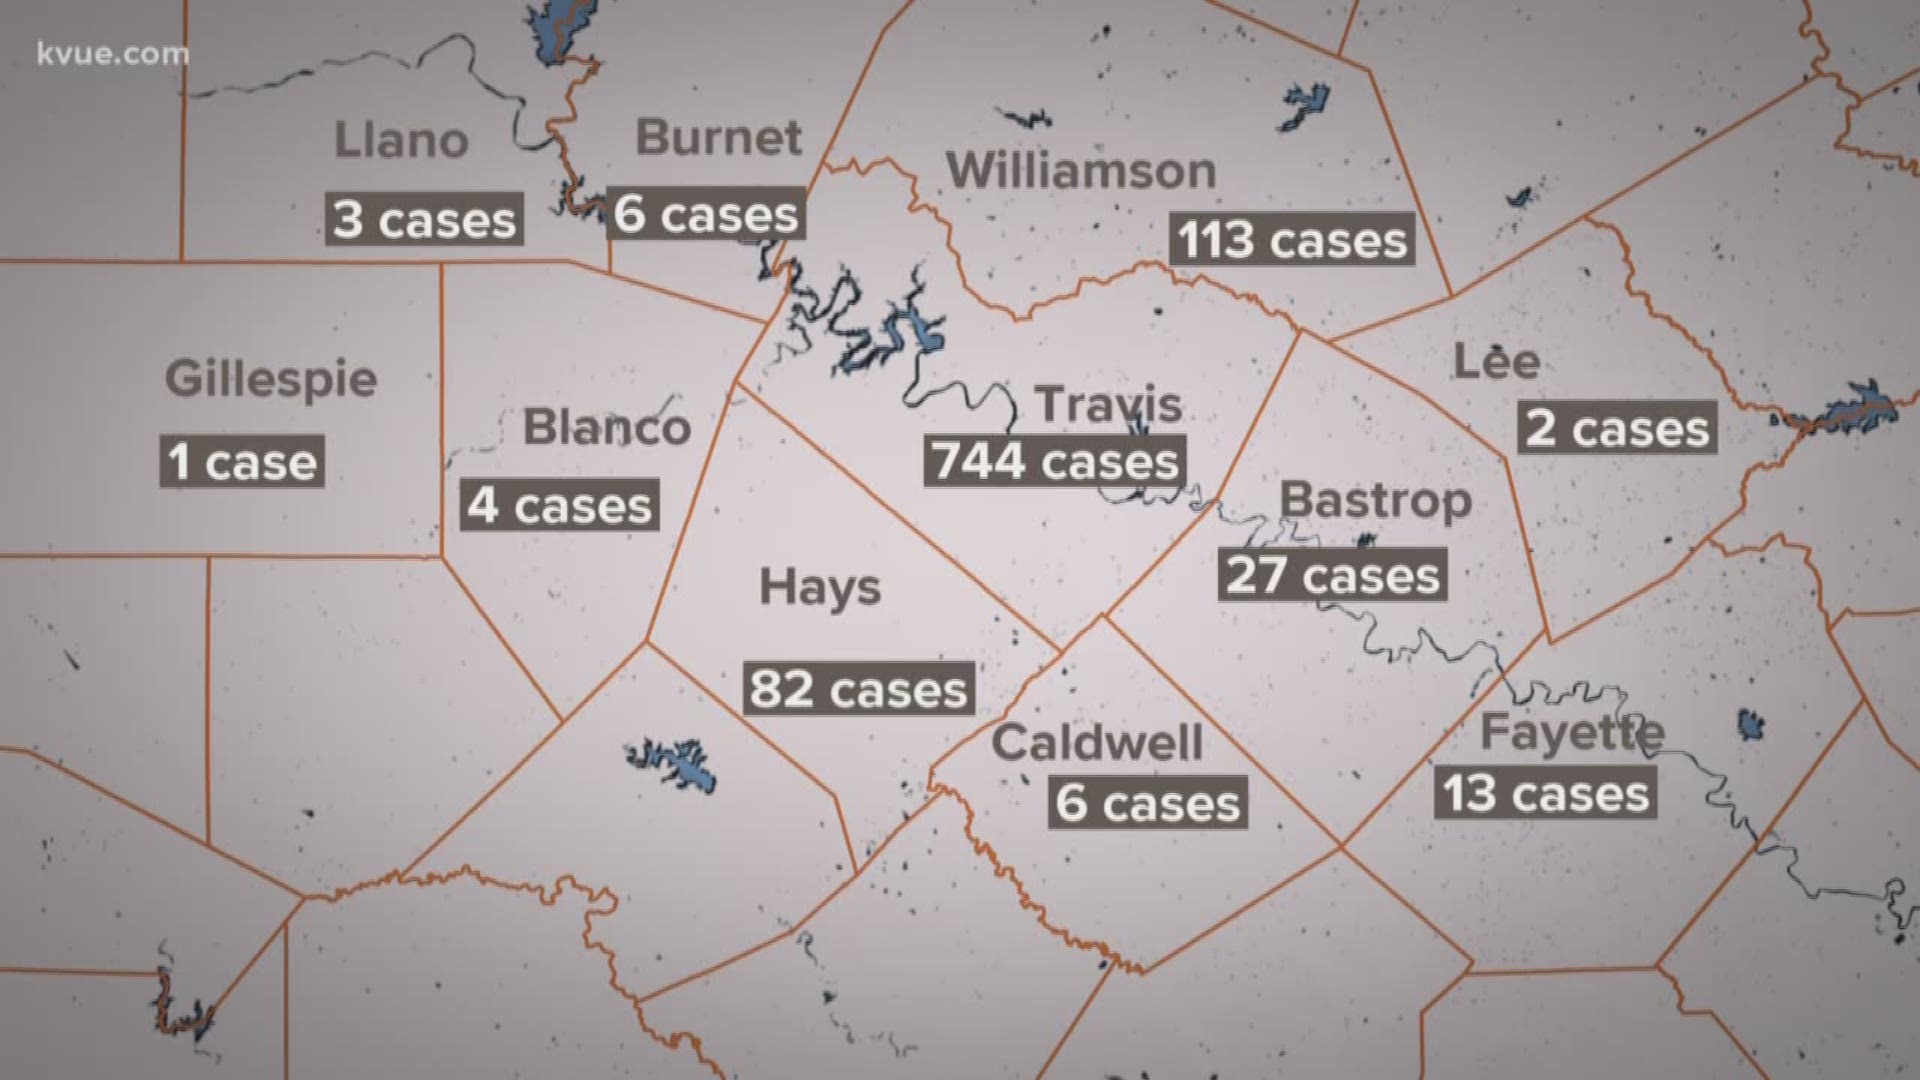 Travis County now has 744 cases.